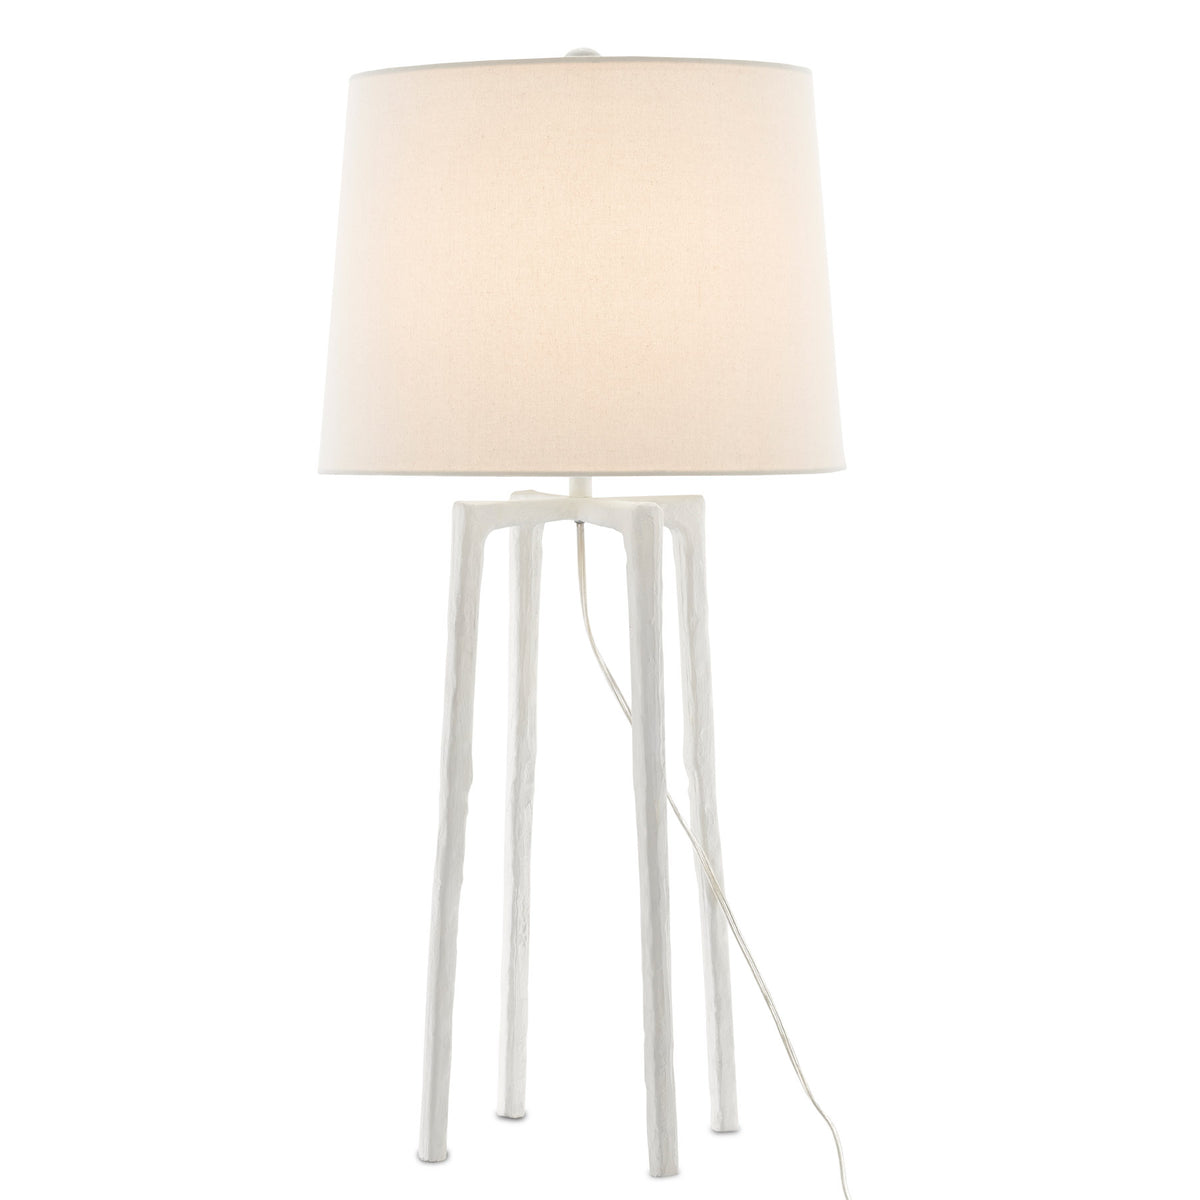 Rowan White Table Lamp